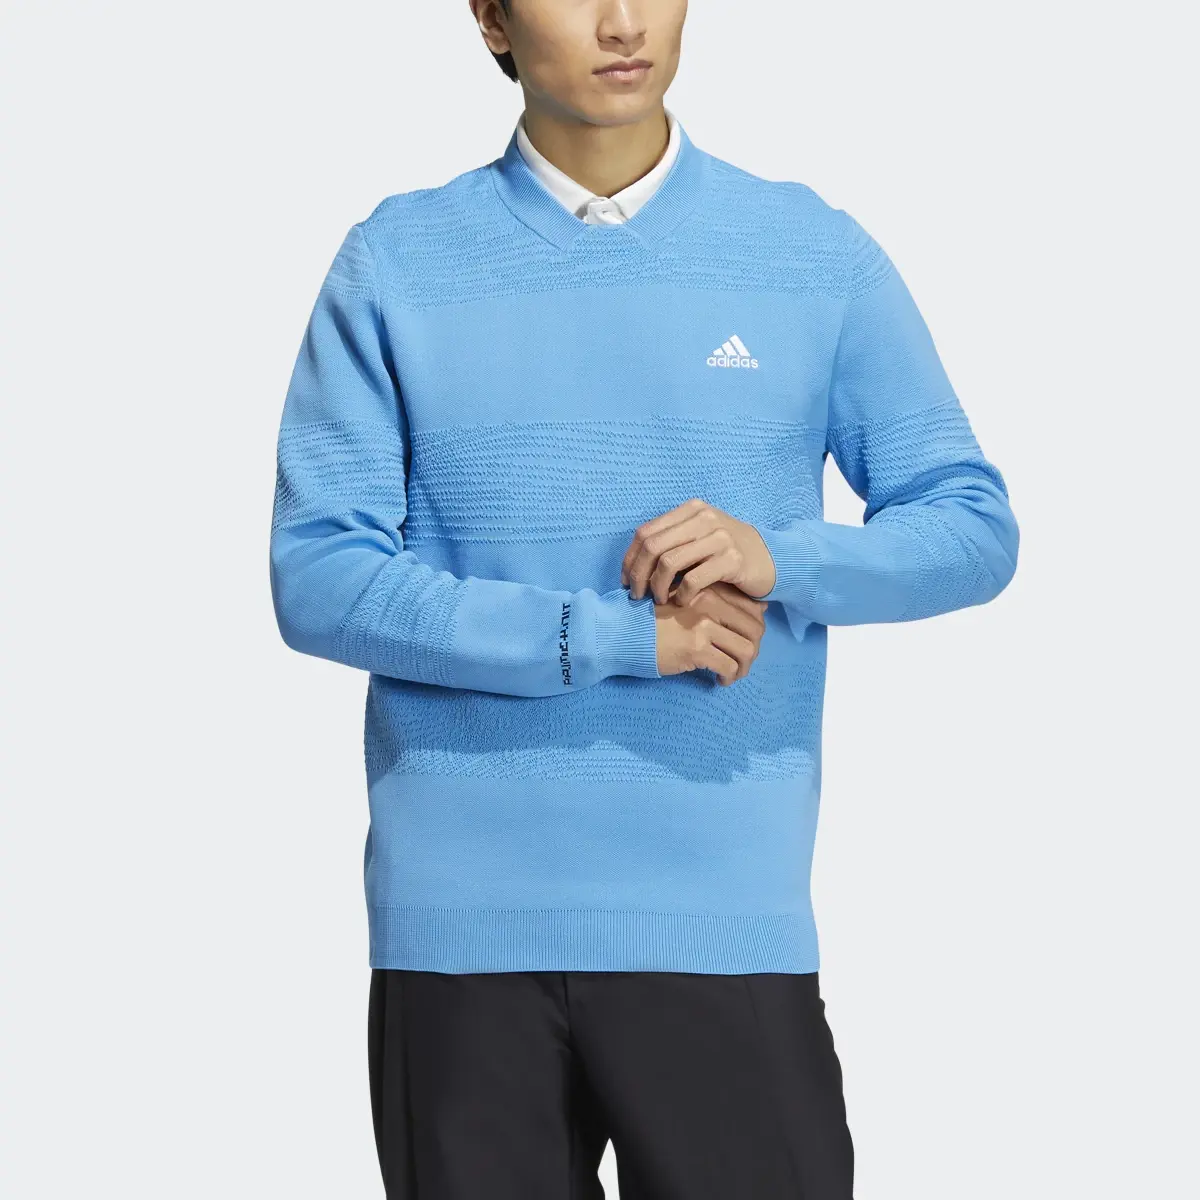 Adidas Made to be Remade Crewneck Sweatshirt. 1